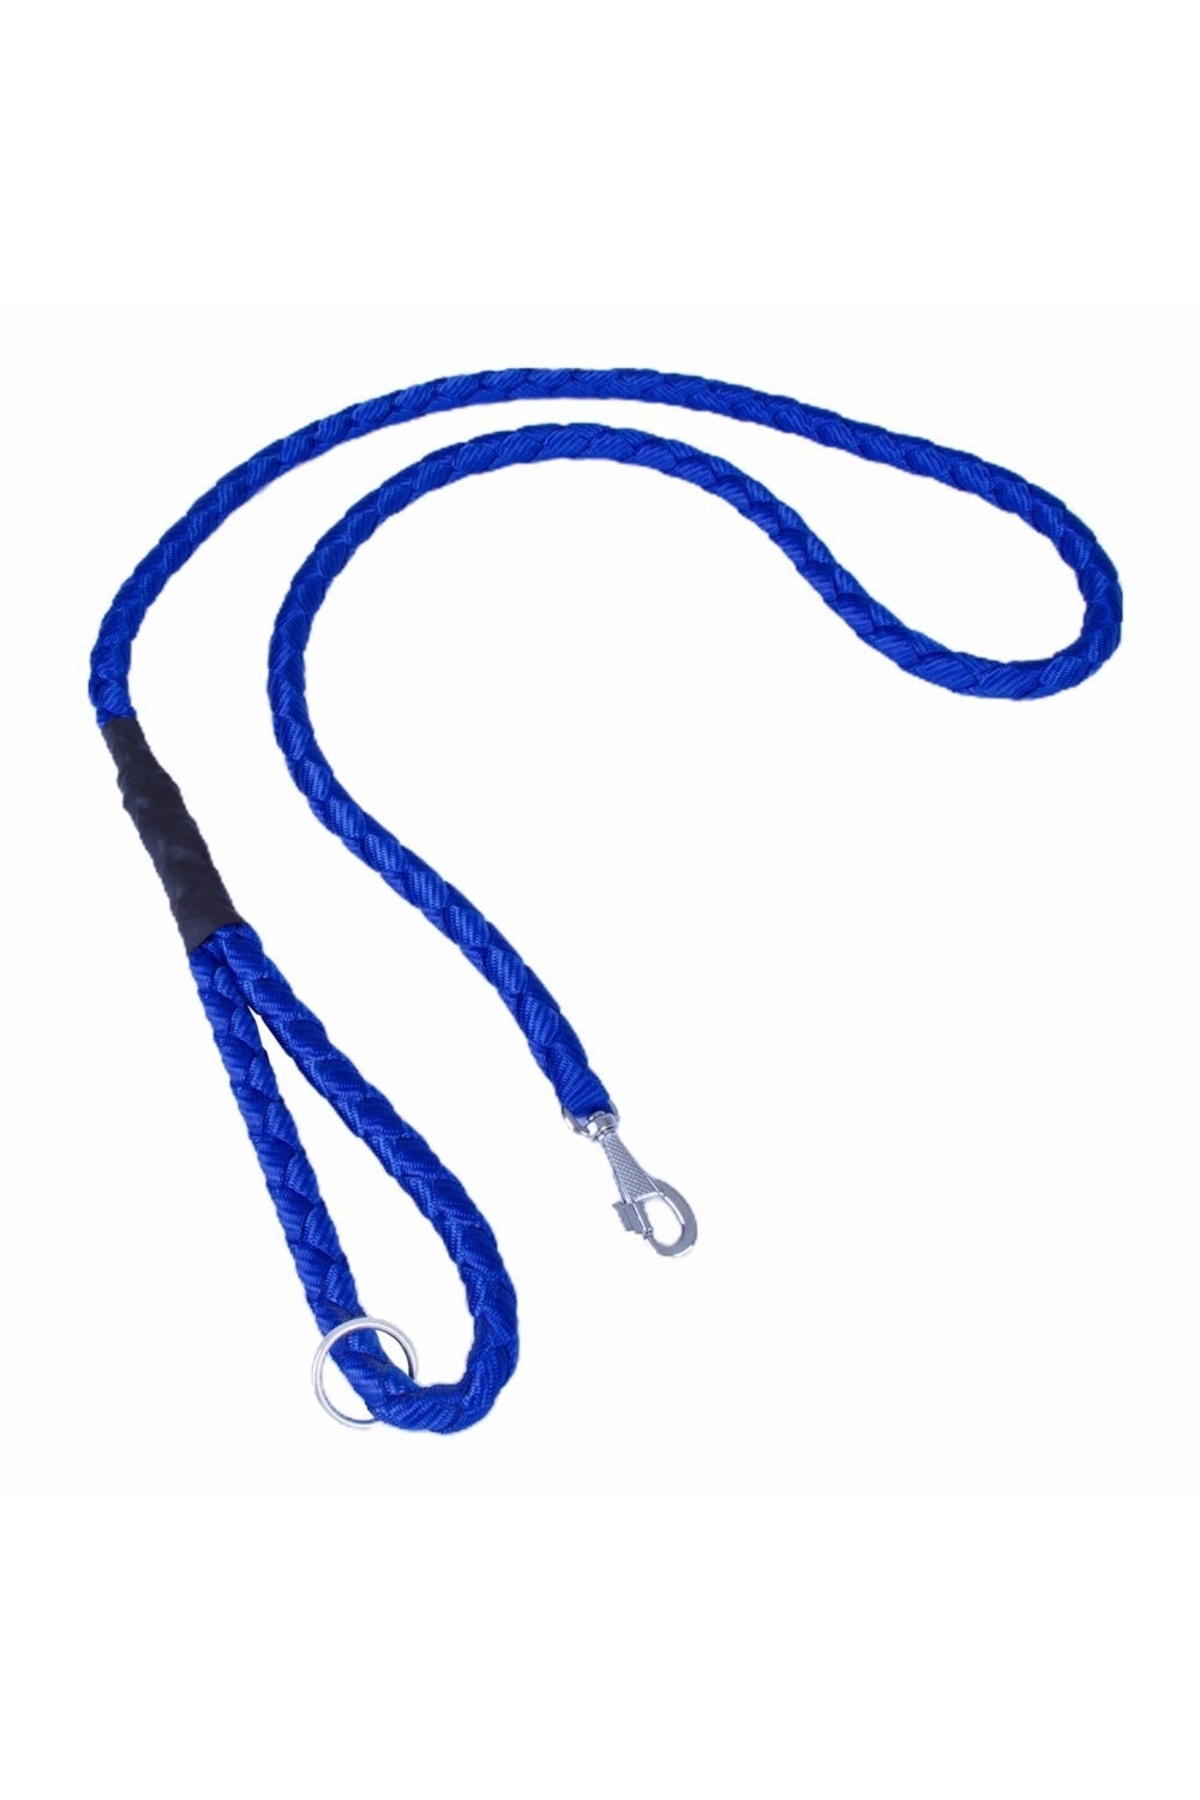 Doggie بند مسافرتی سگ بافته دست ساز غیر M-2x140cm آبی رویال DOGT20MROYALBLUE